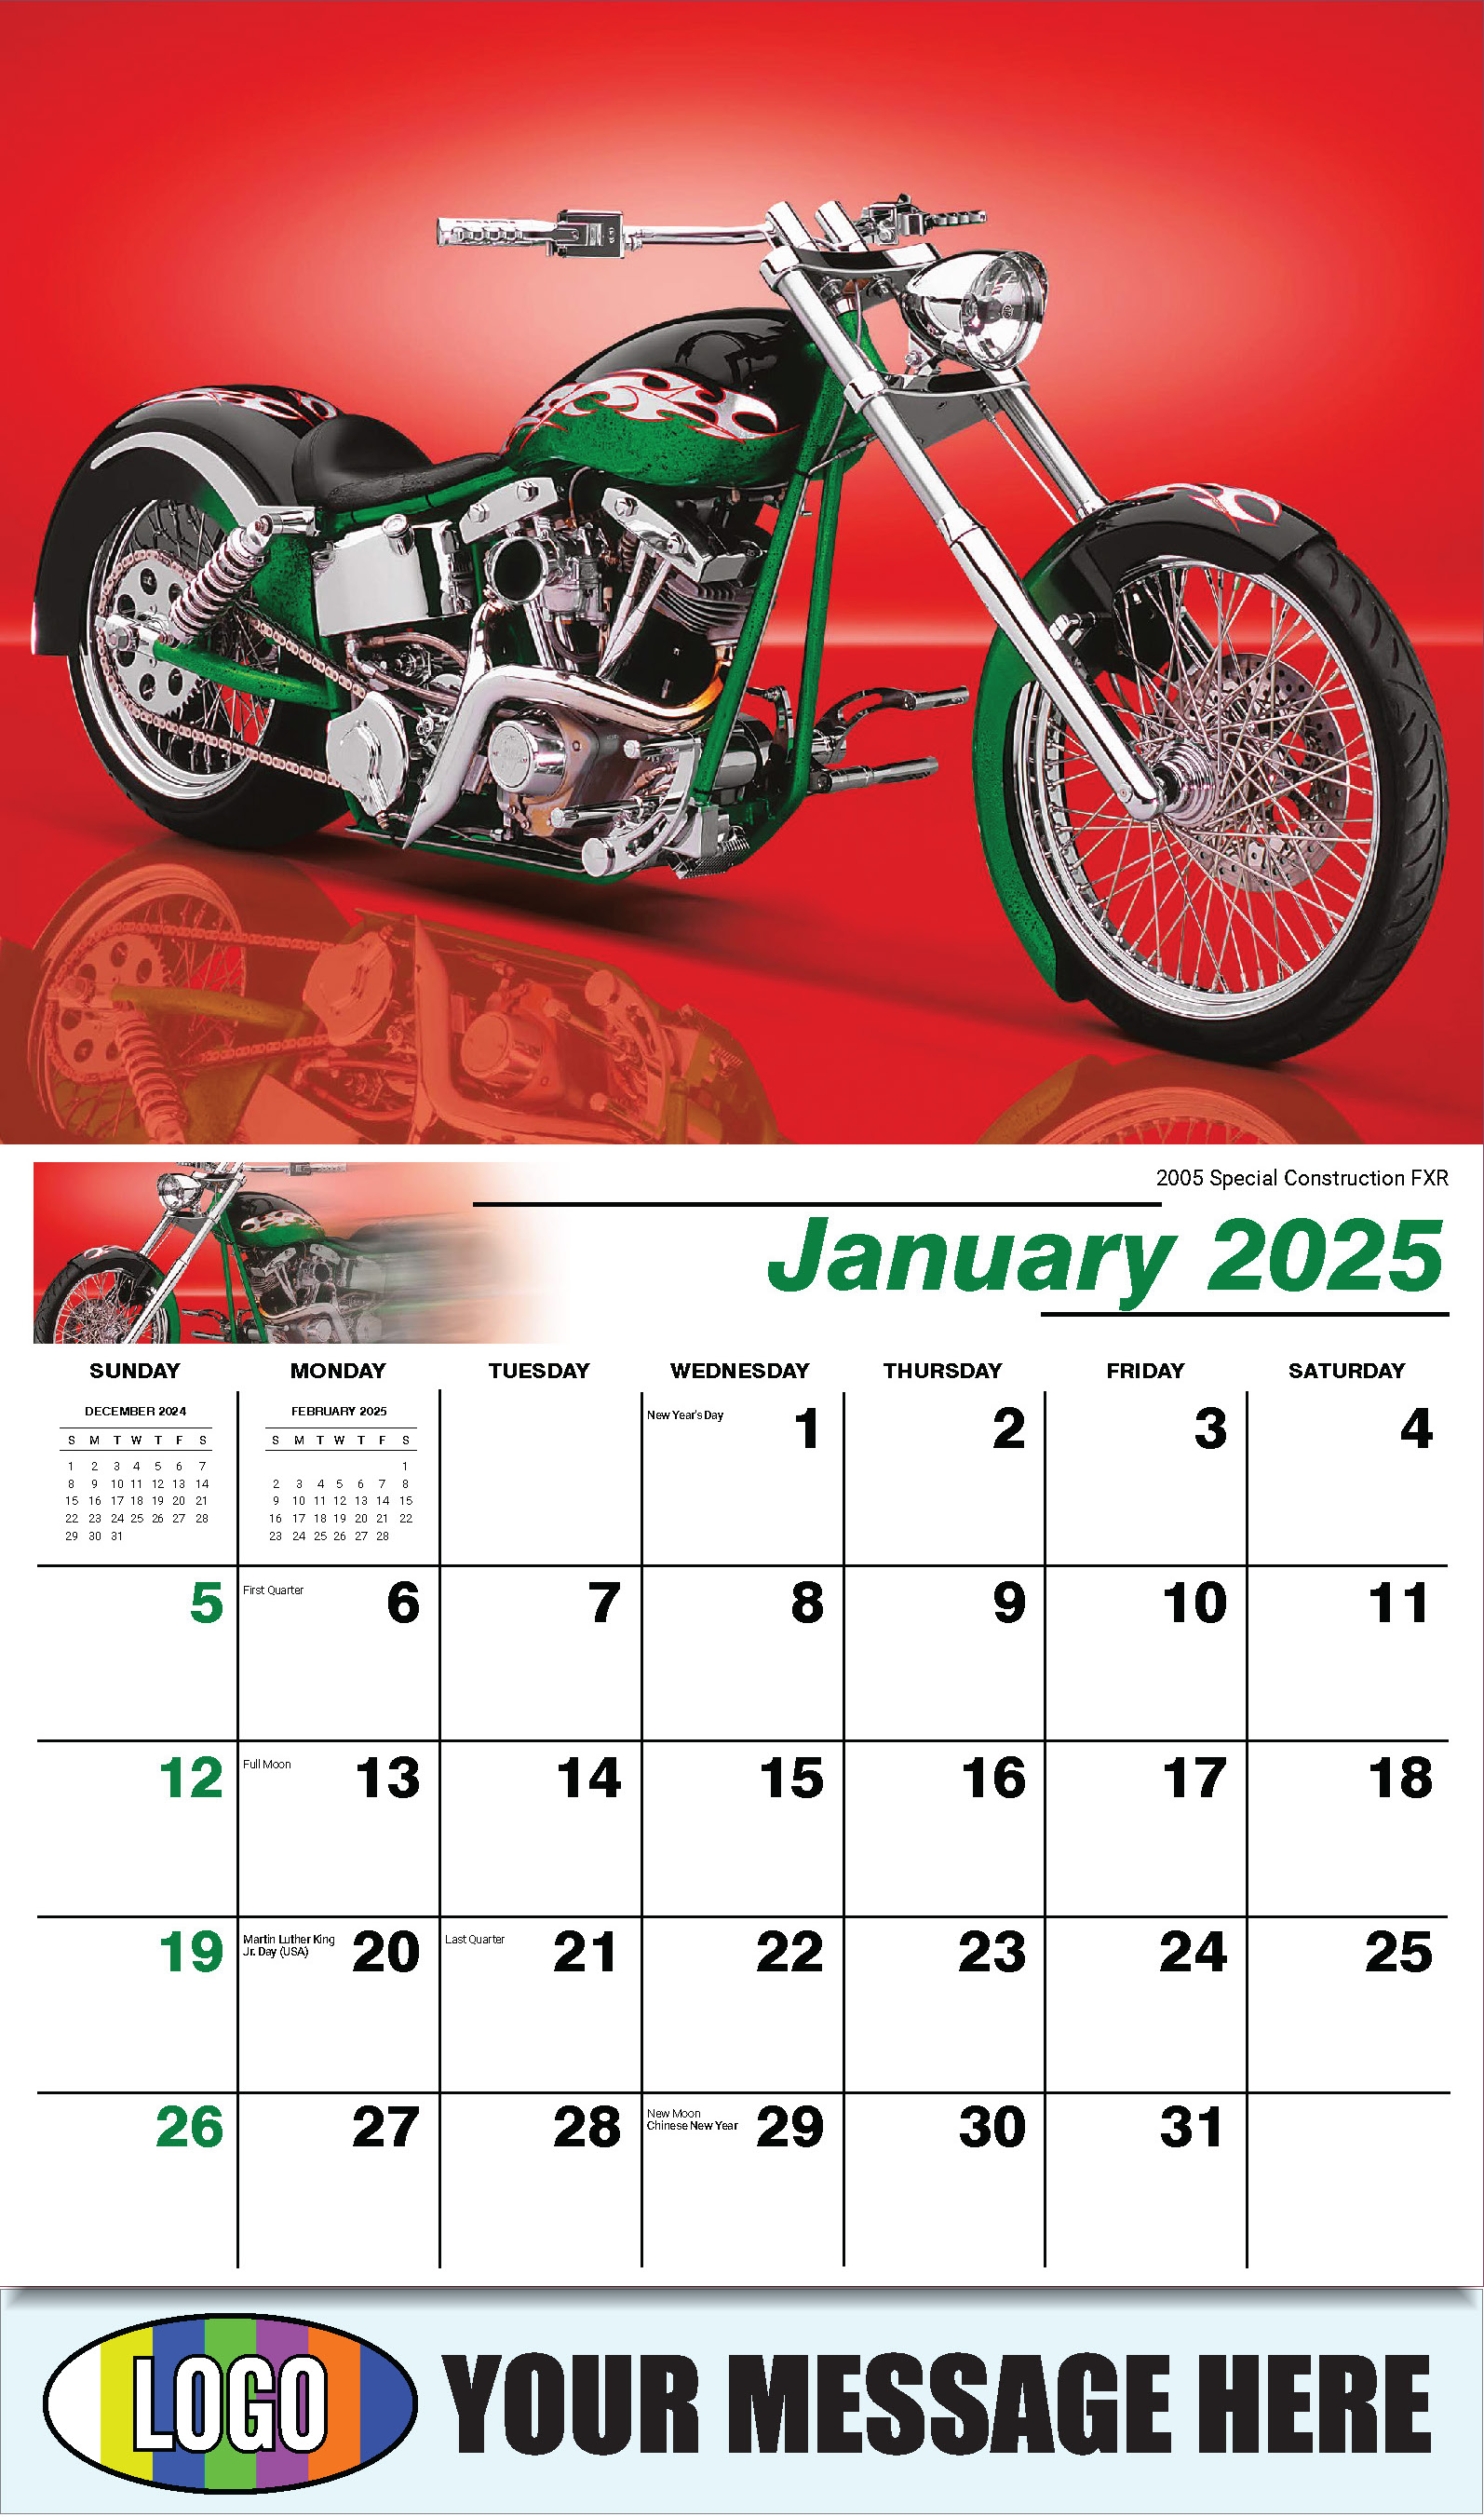 Motorcycle Mania 2025 Automotve Business Advertising Wall Calendar - January